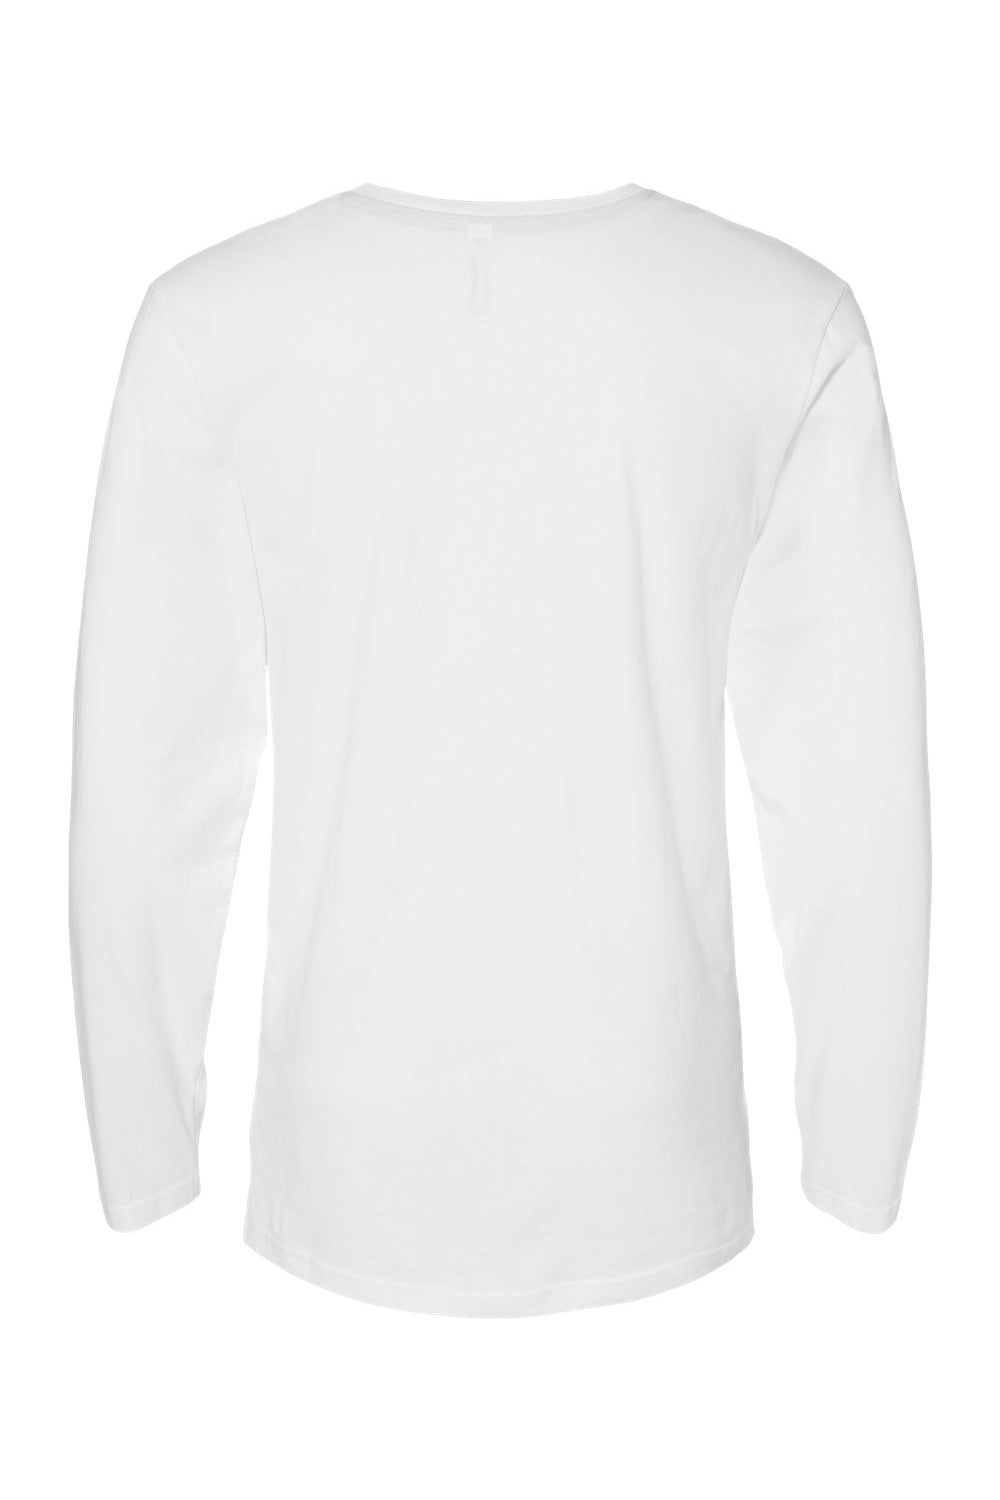 LAT 6918 Mens Fine Jersey Long Sleeve Crewneck T-Shirt White Flat Back